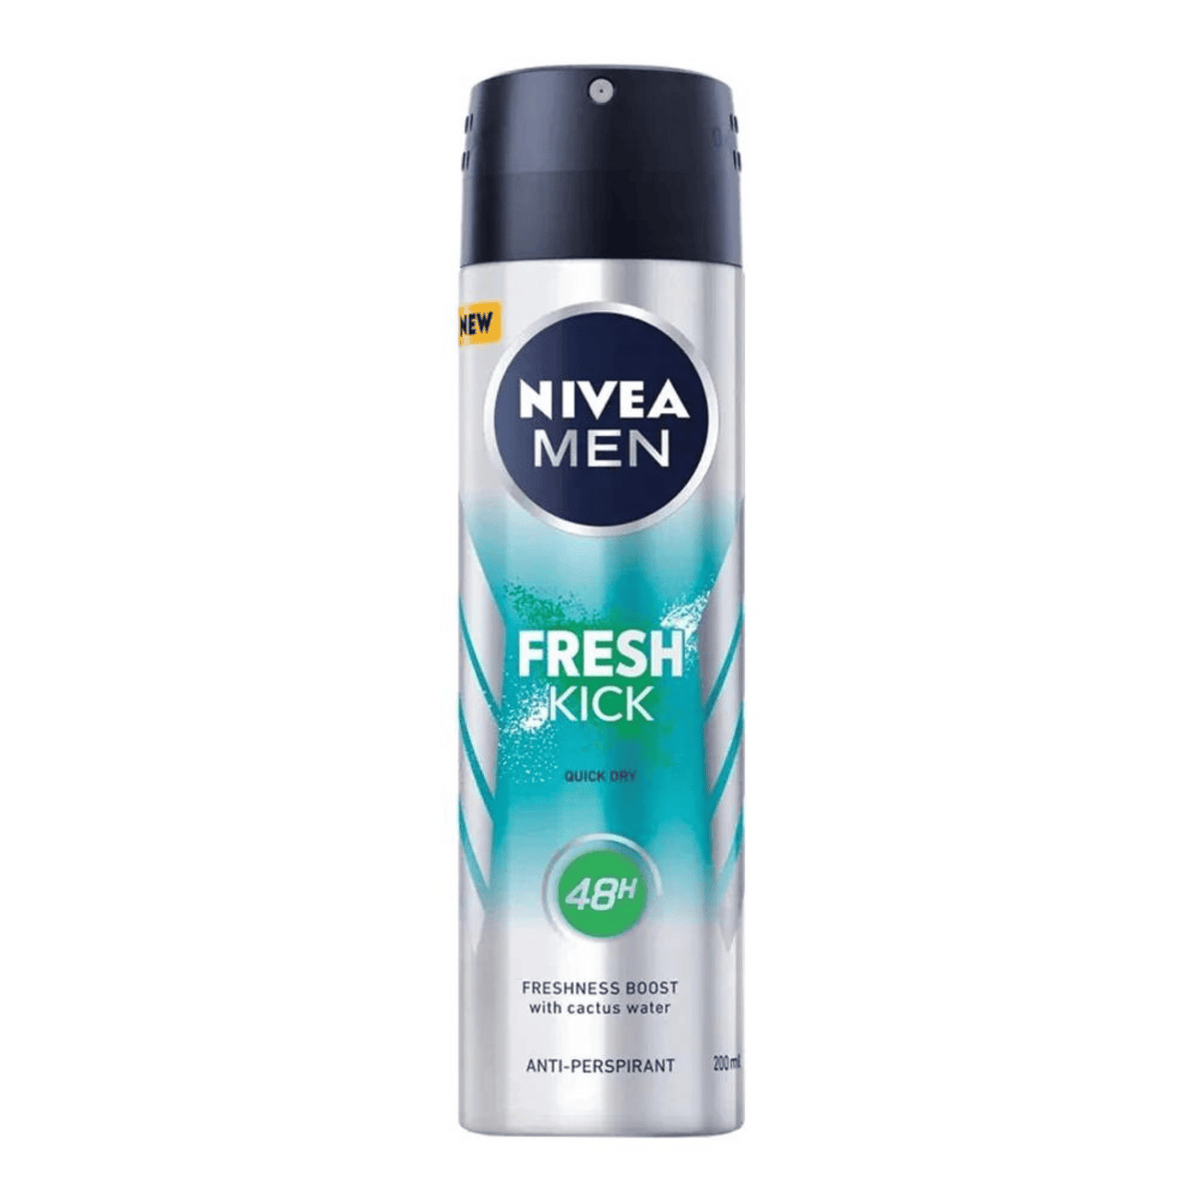 Primary Image of Men's Spray Cool Kick Fresh Anti-Perspirant Deodorant